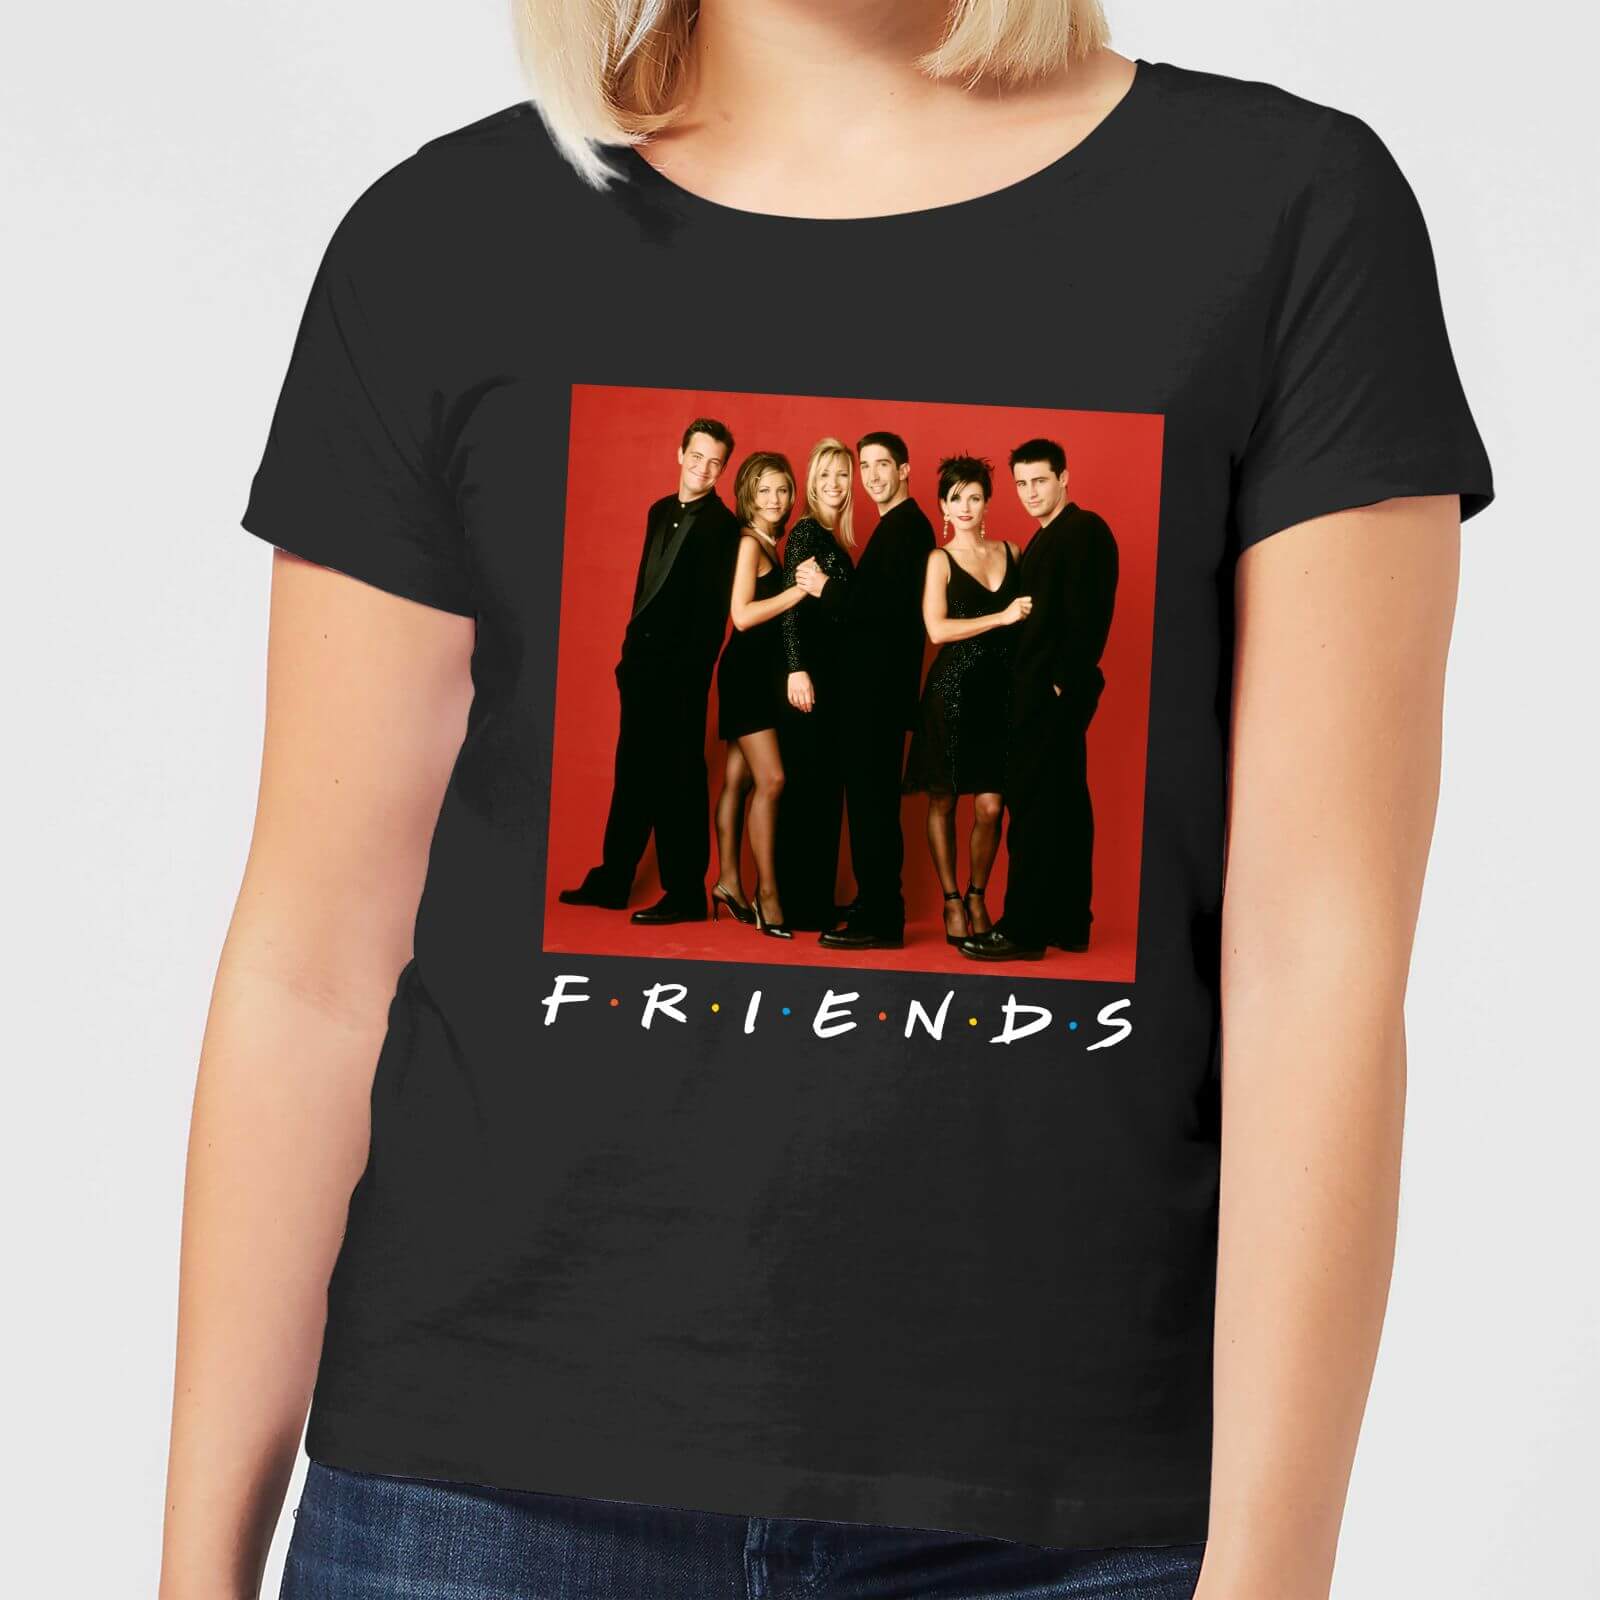 Friends Character Pose Women's T-Shirt - Black - 4XL - Black